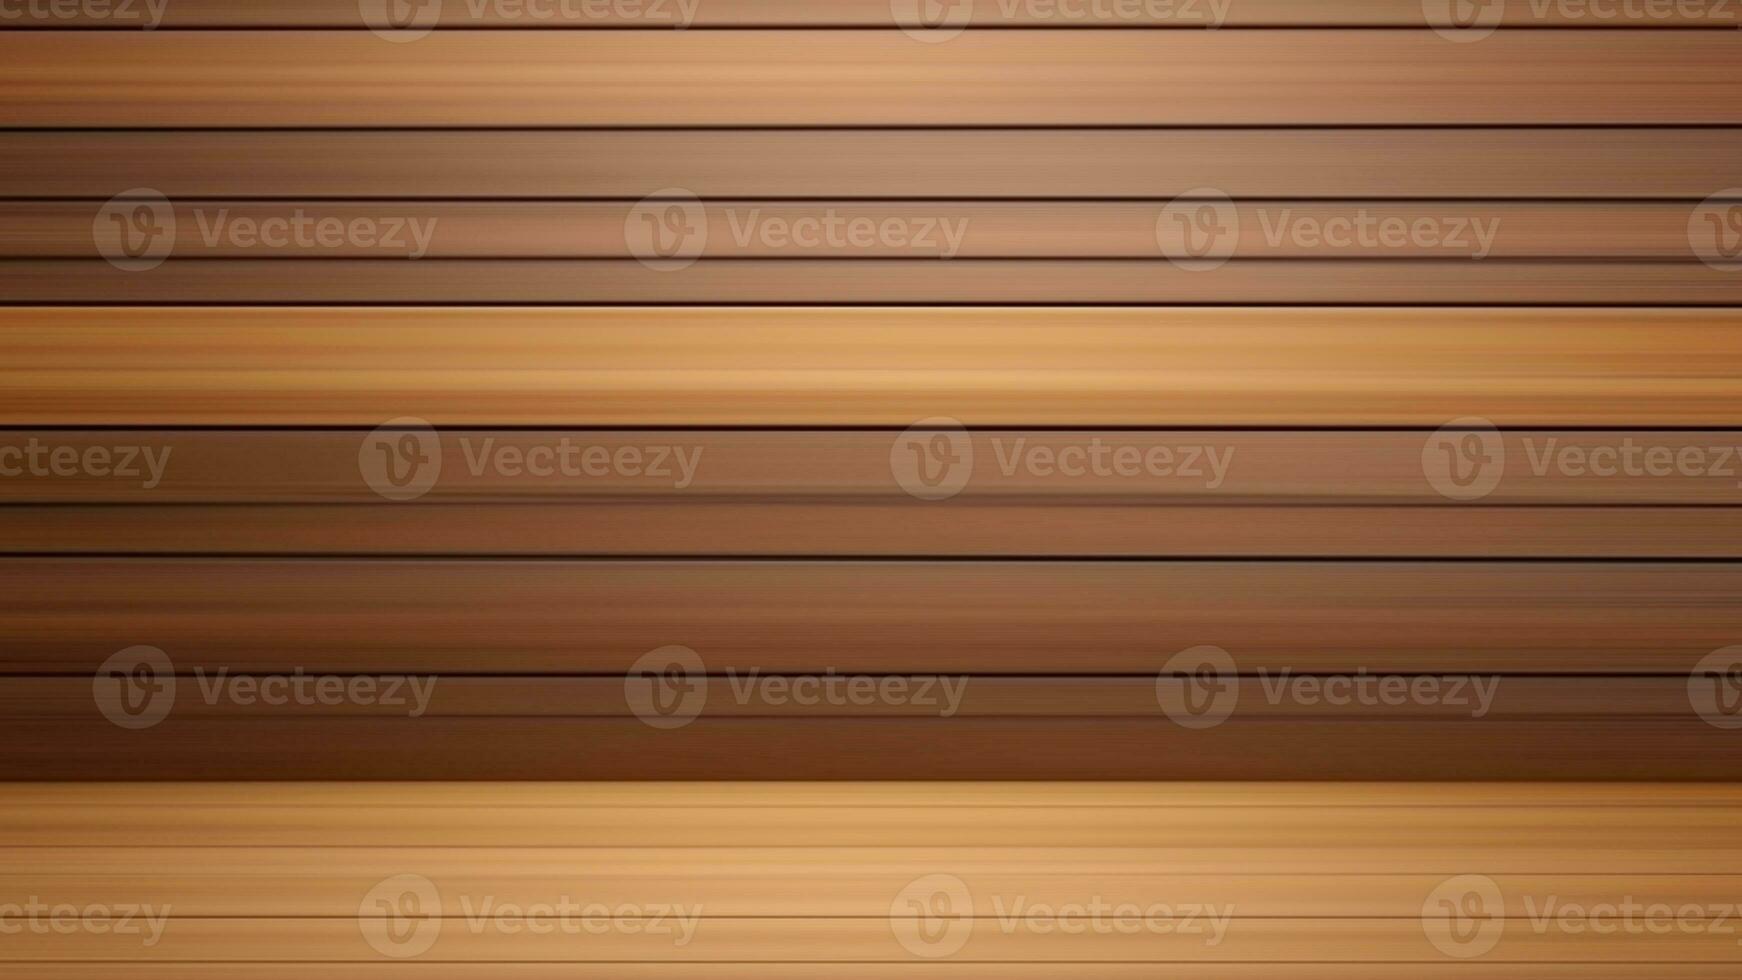 madera tablón marrón textura antecedentes. vector ilustración para tu gráfico diseño o producto presentación. foto